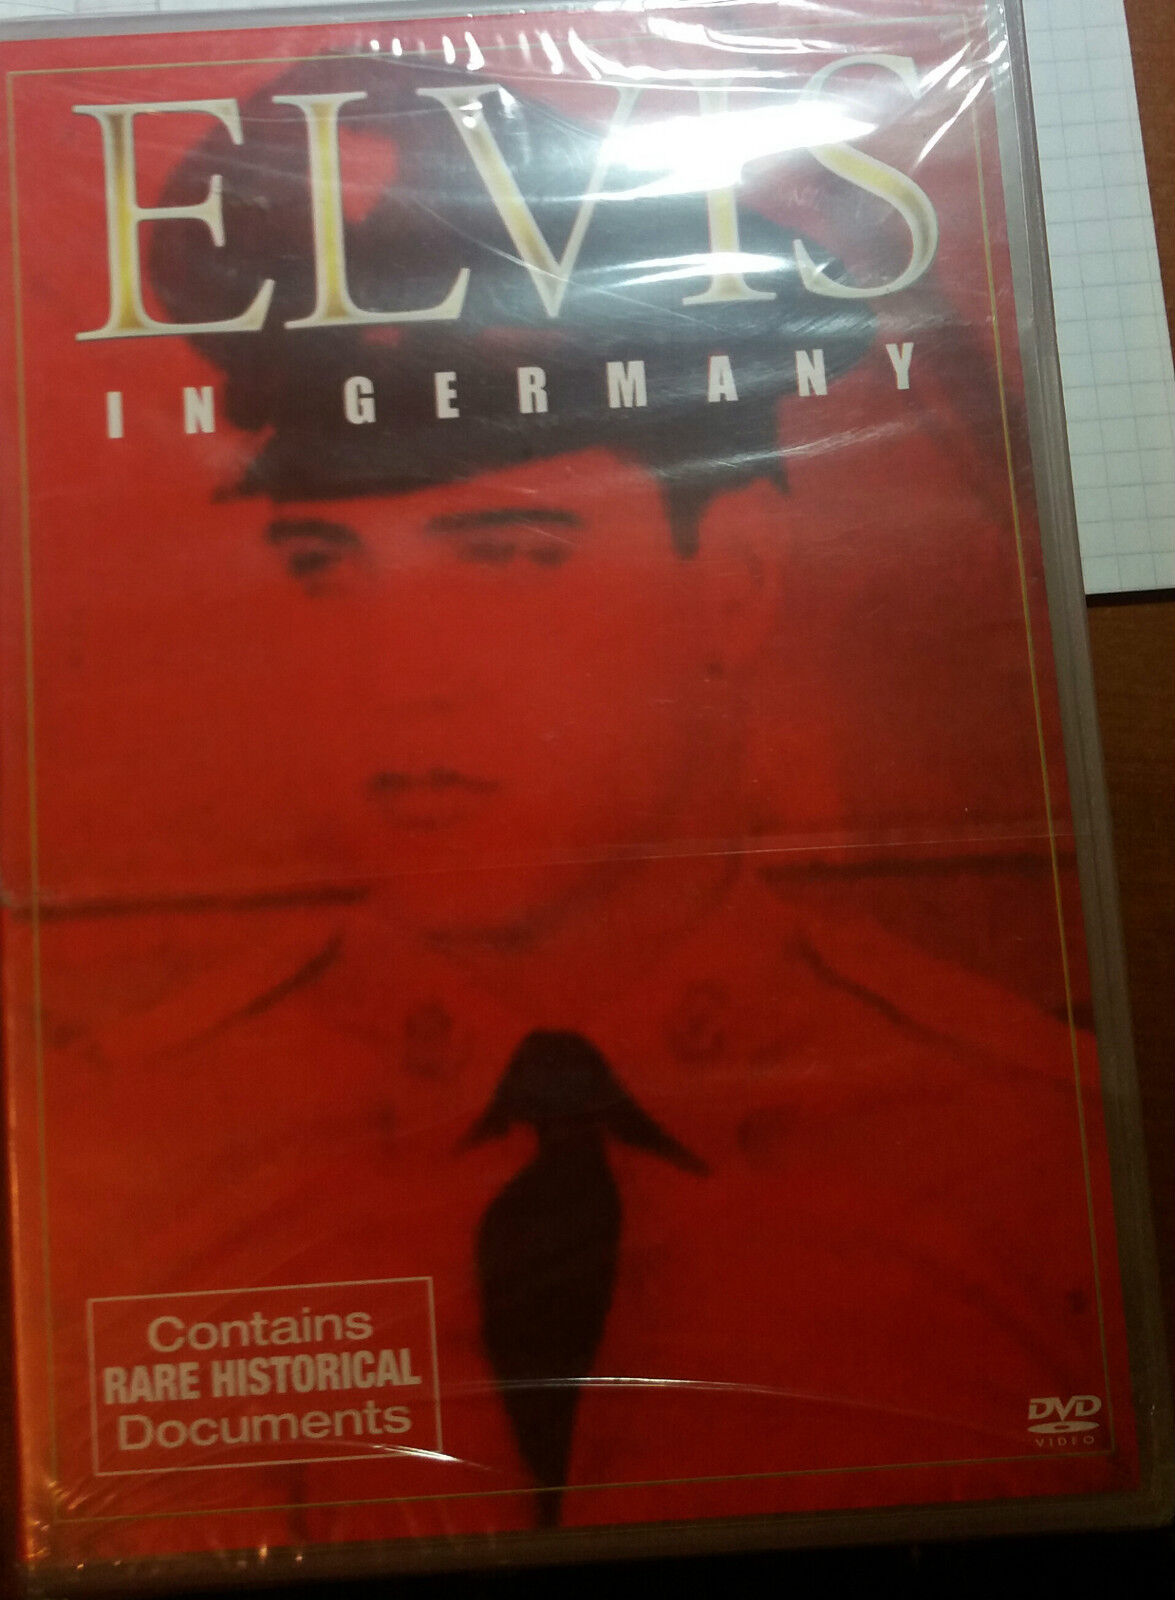 ELVIS IN GERMANY - WATERFALLSTUDIOS - 2003 - DVD - M dvd usato